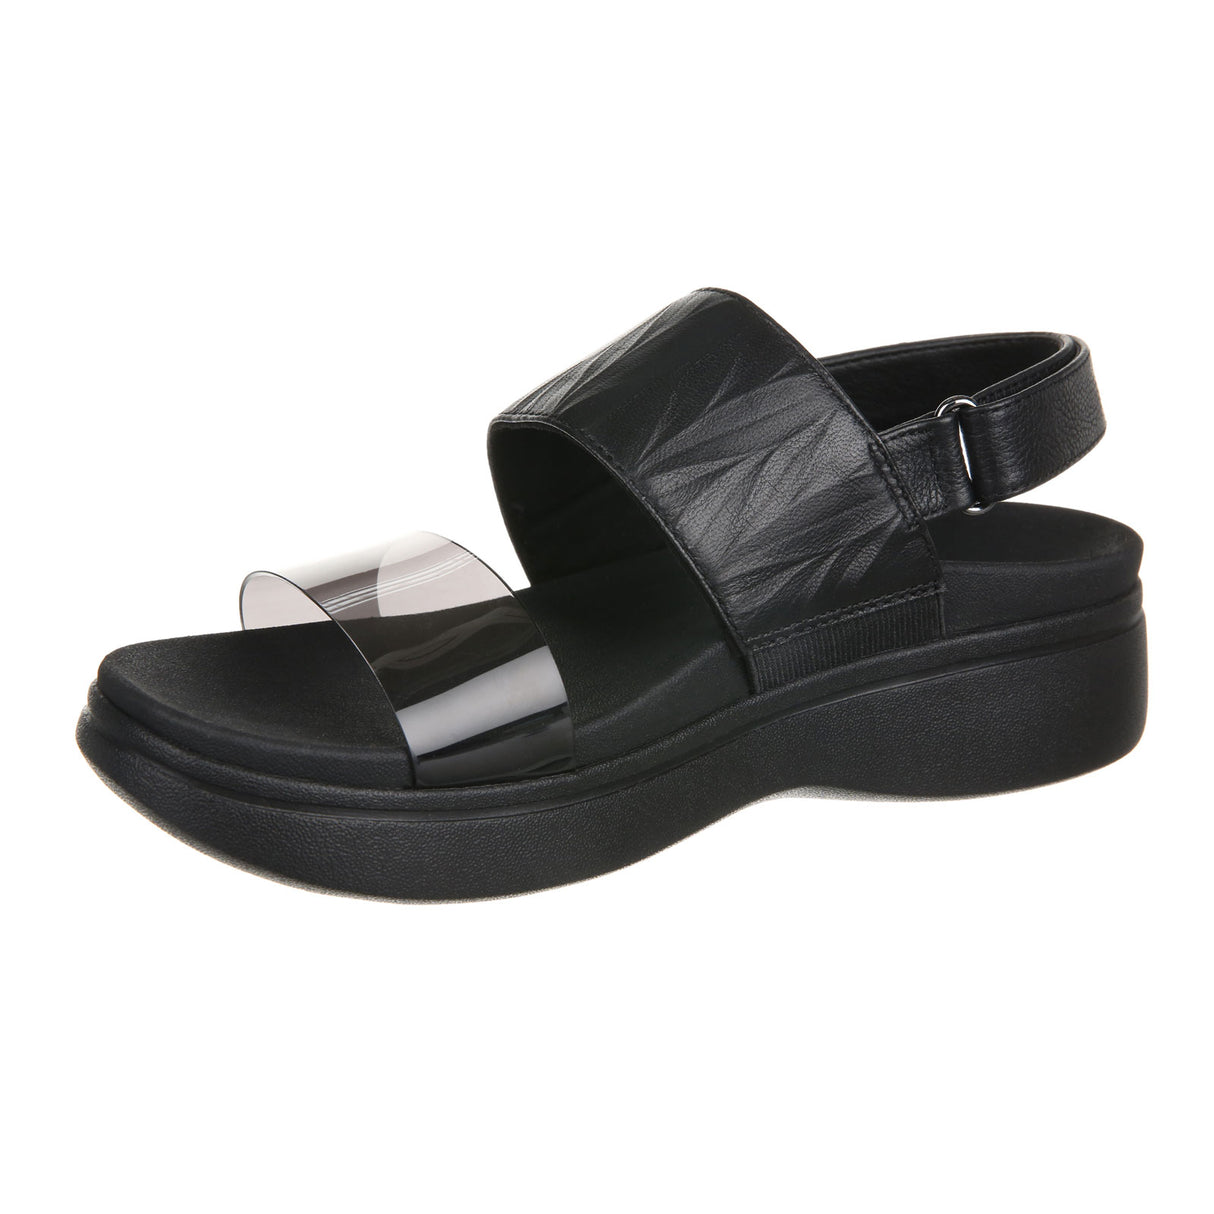 Vionic Karleen Sandal (Women) - Black Sandals - Backstrap - The Heel Shoe Fitters